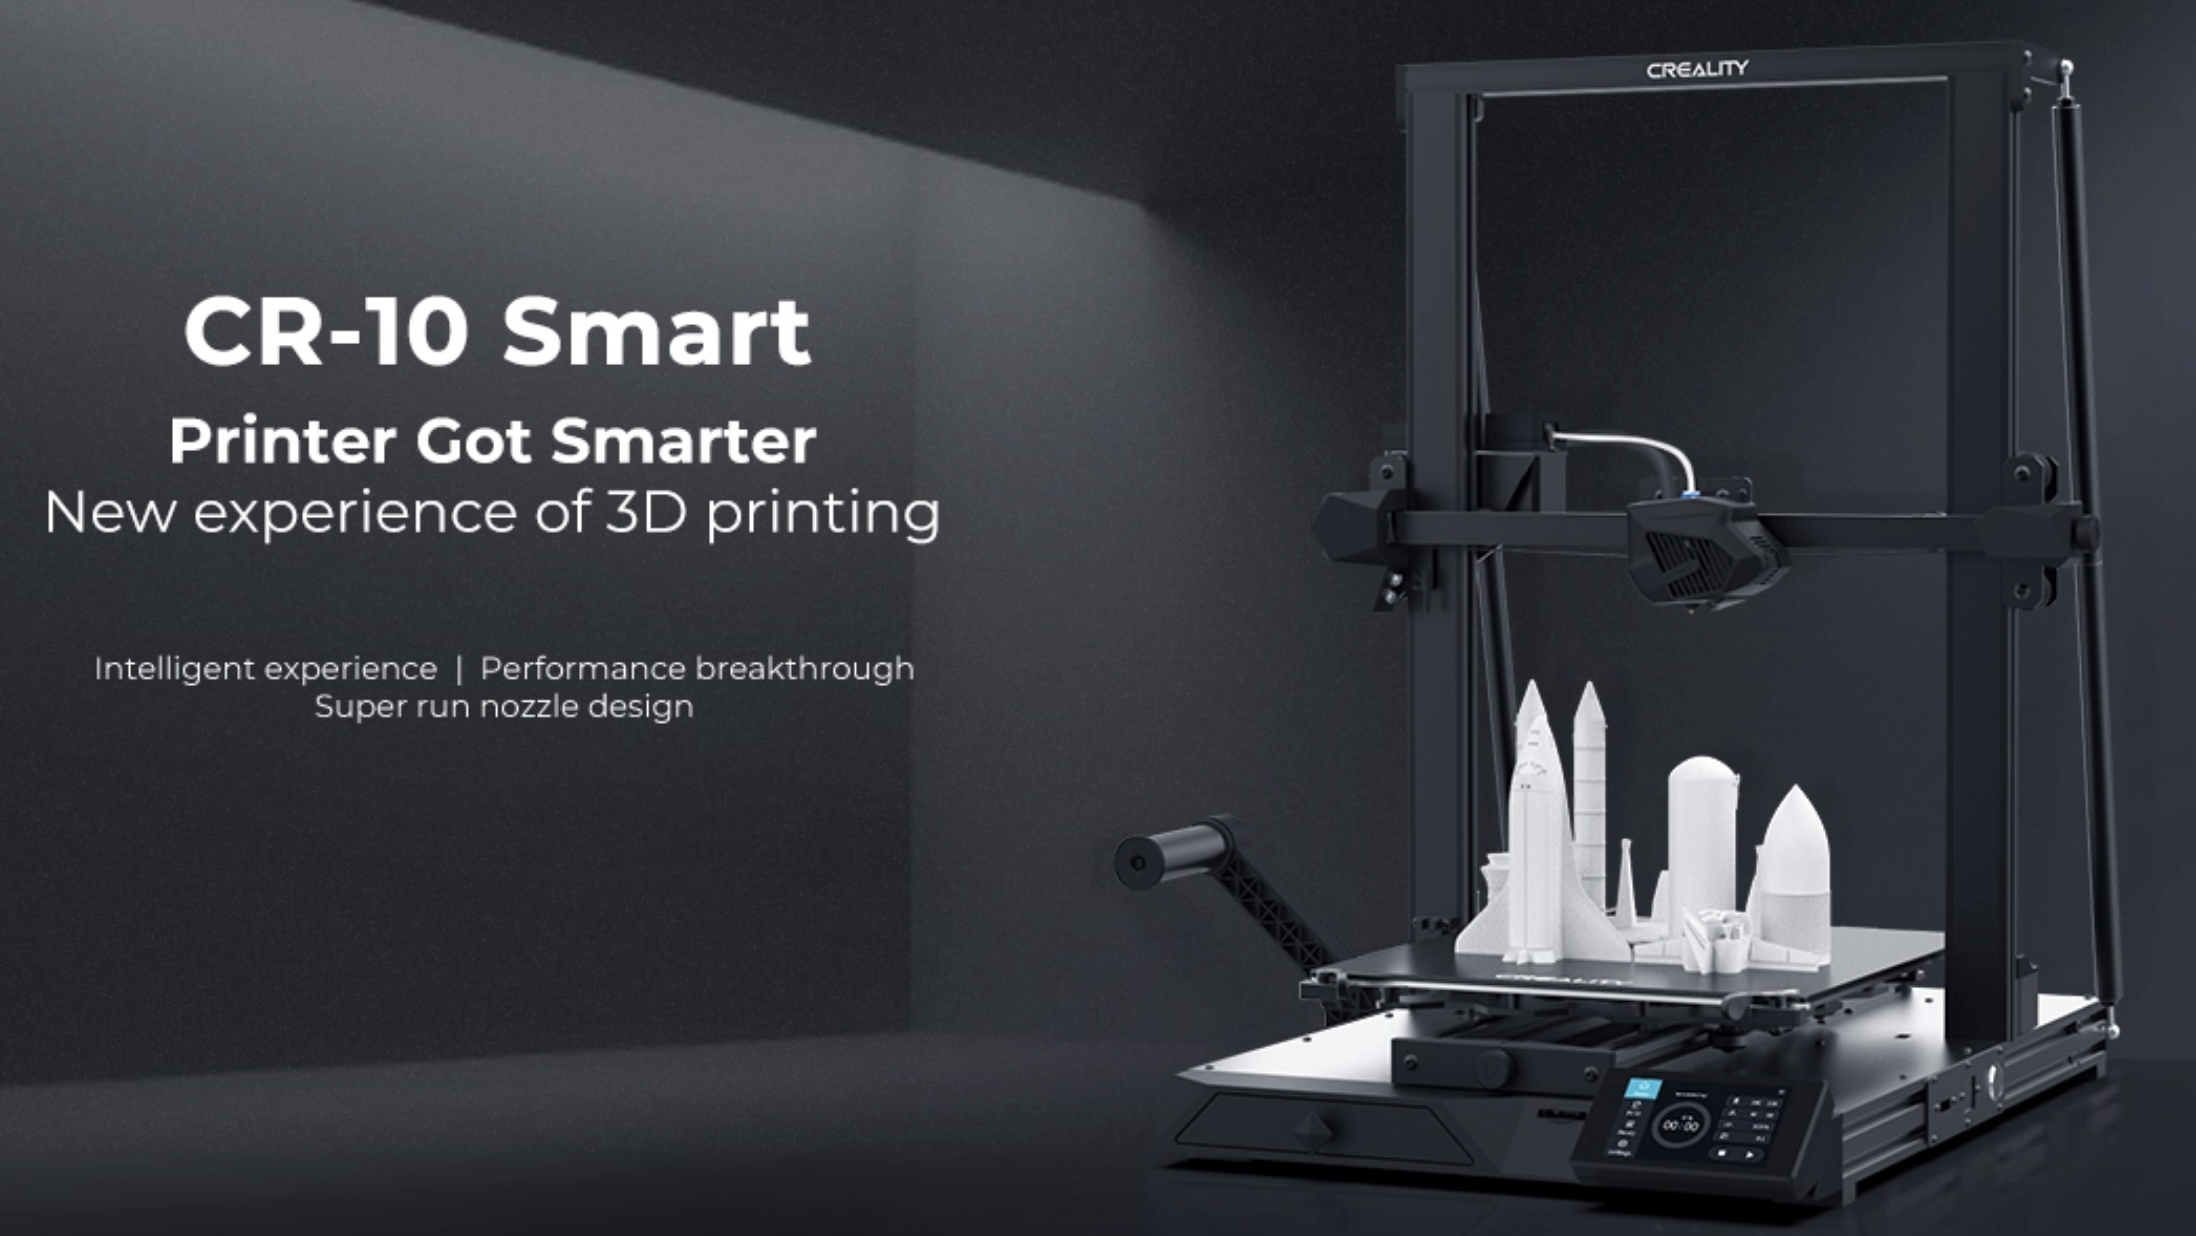 Creality CR-10 Smart 3D Printer
CR-10 스마트 3D프린터
4.3인치 터치스크린, 듀얼Z축, 지능형 오토레벨링 